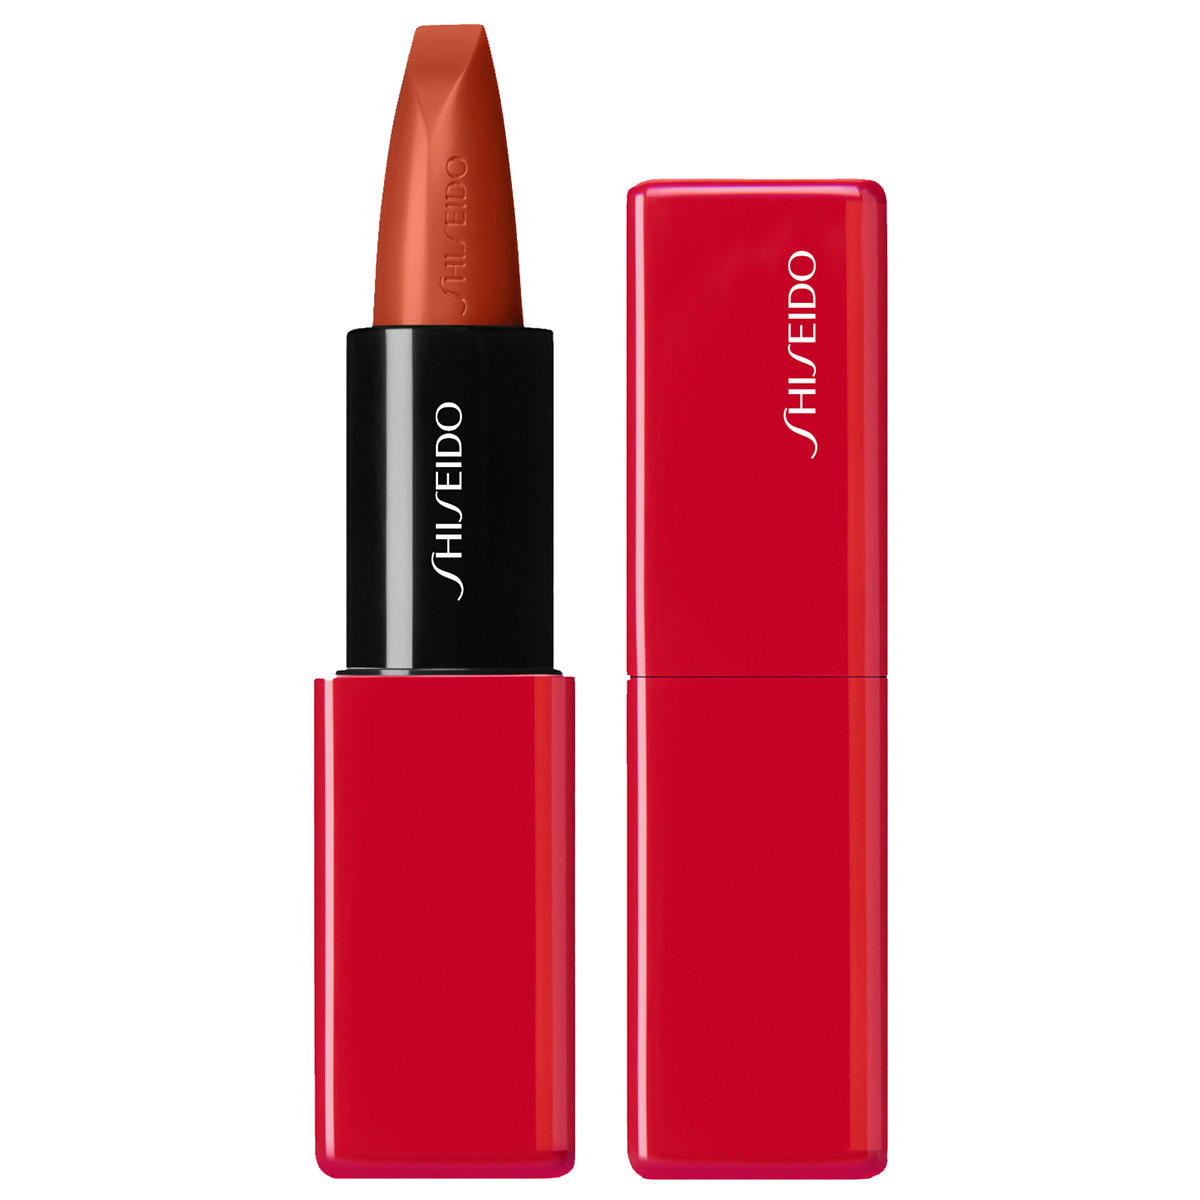 Shiseido TechnoSatin Gel Lipstick 414 UPLOAD 4 g - 1